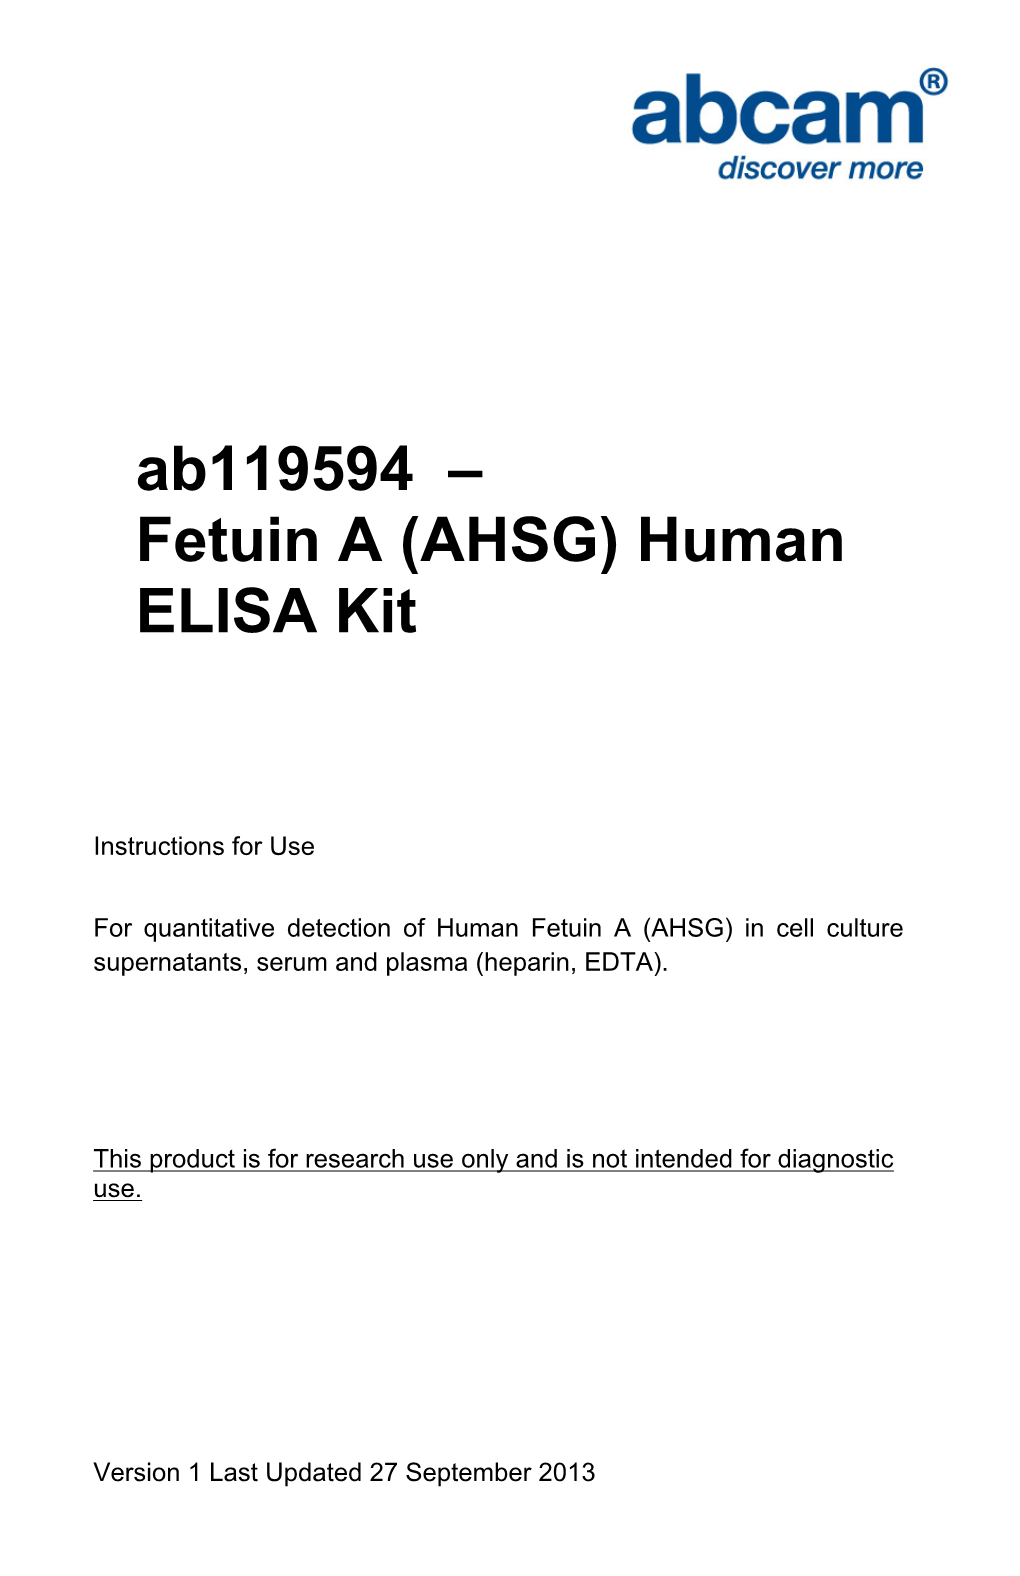 Fetuin a (AHSG) Human ELISA Kit